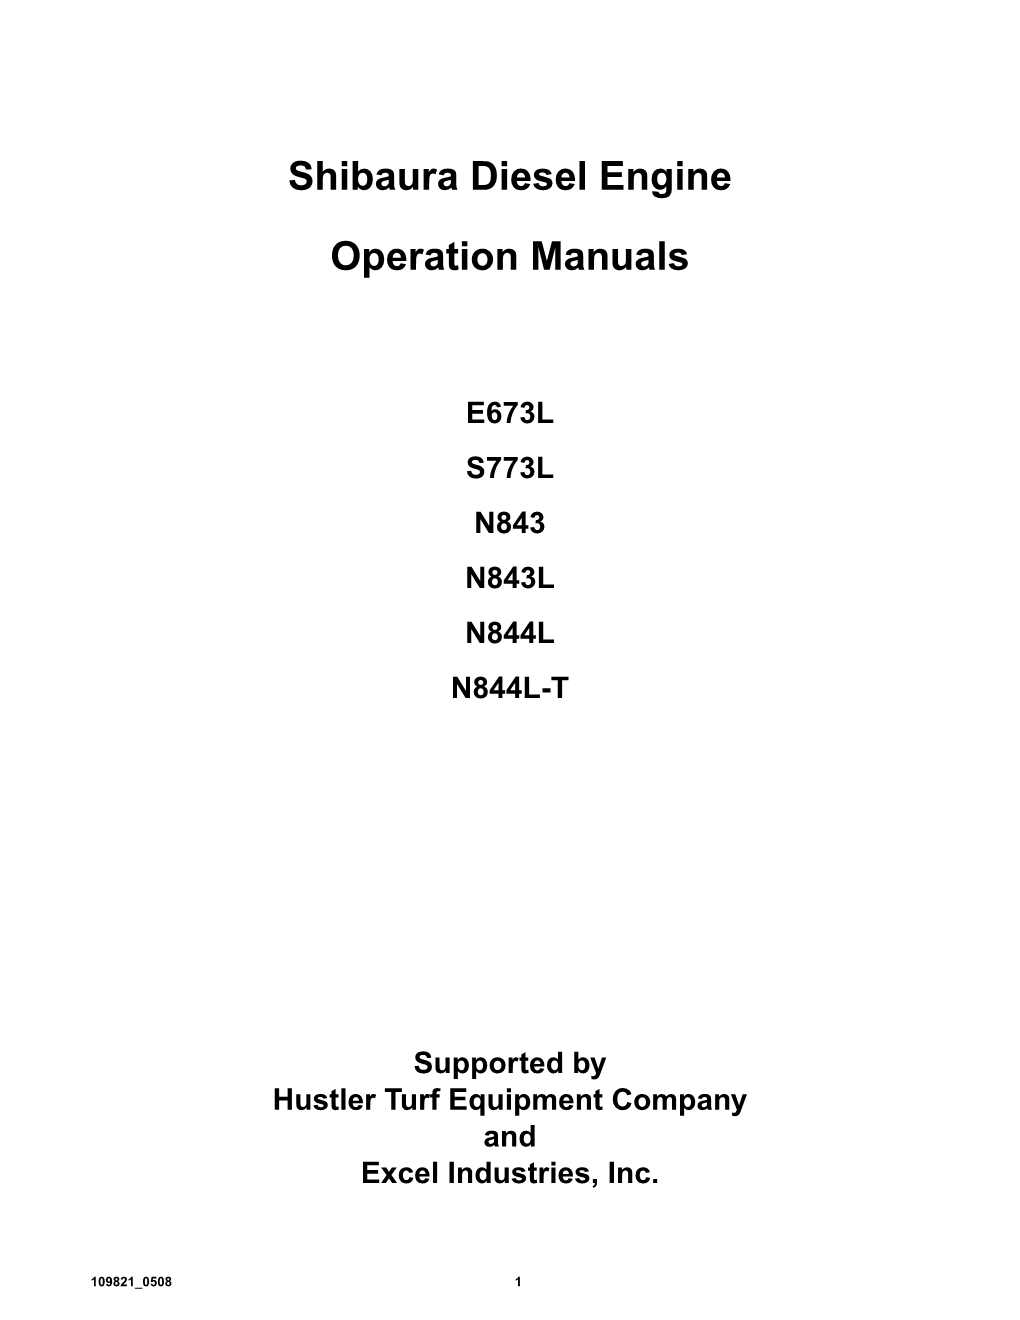 Shibaura Diesel Engine Operation Manuals